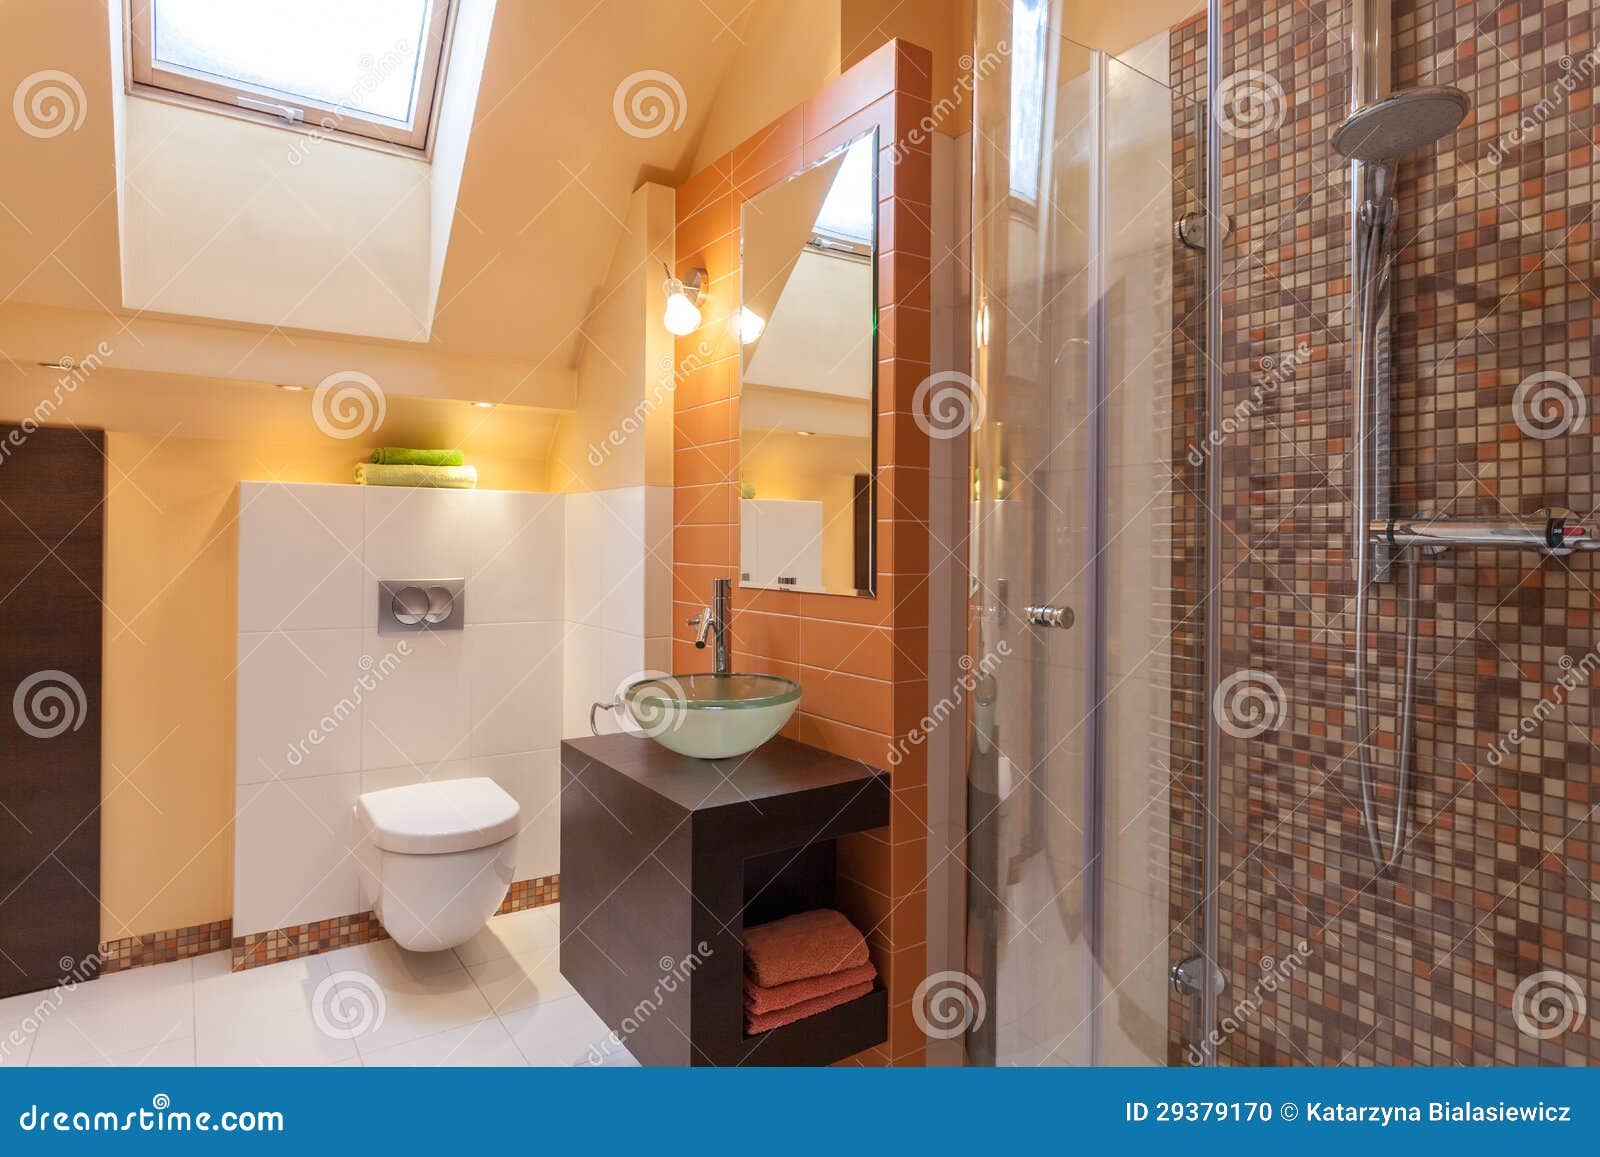 classy house - bathroom interior